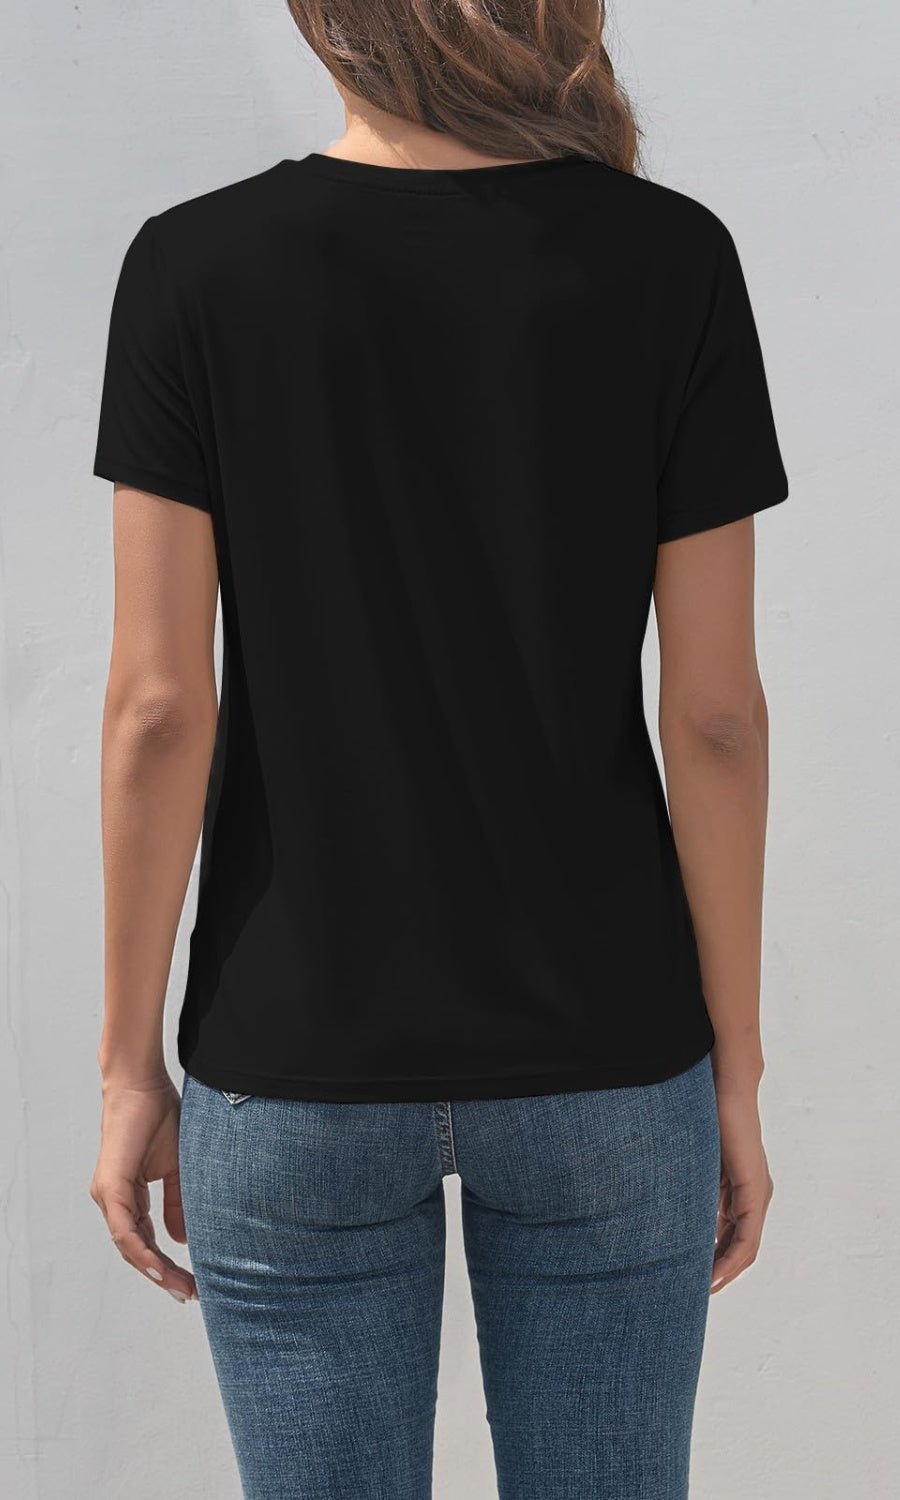 Dragonfly Graphic Round Neck Short Sleeve T-Shirt Trendsi